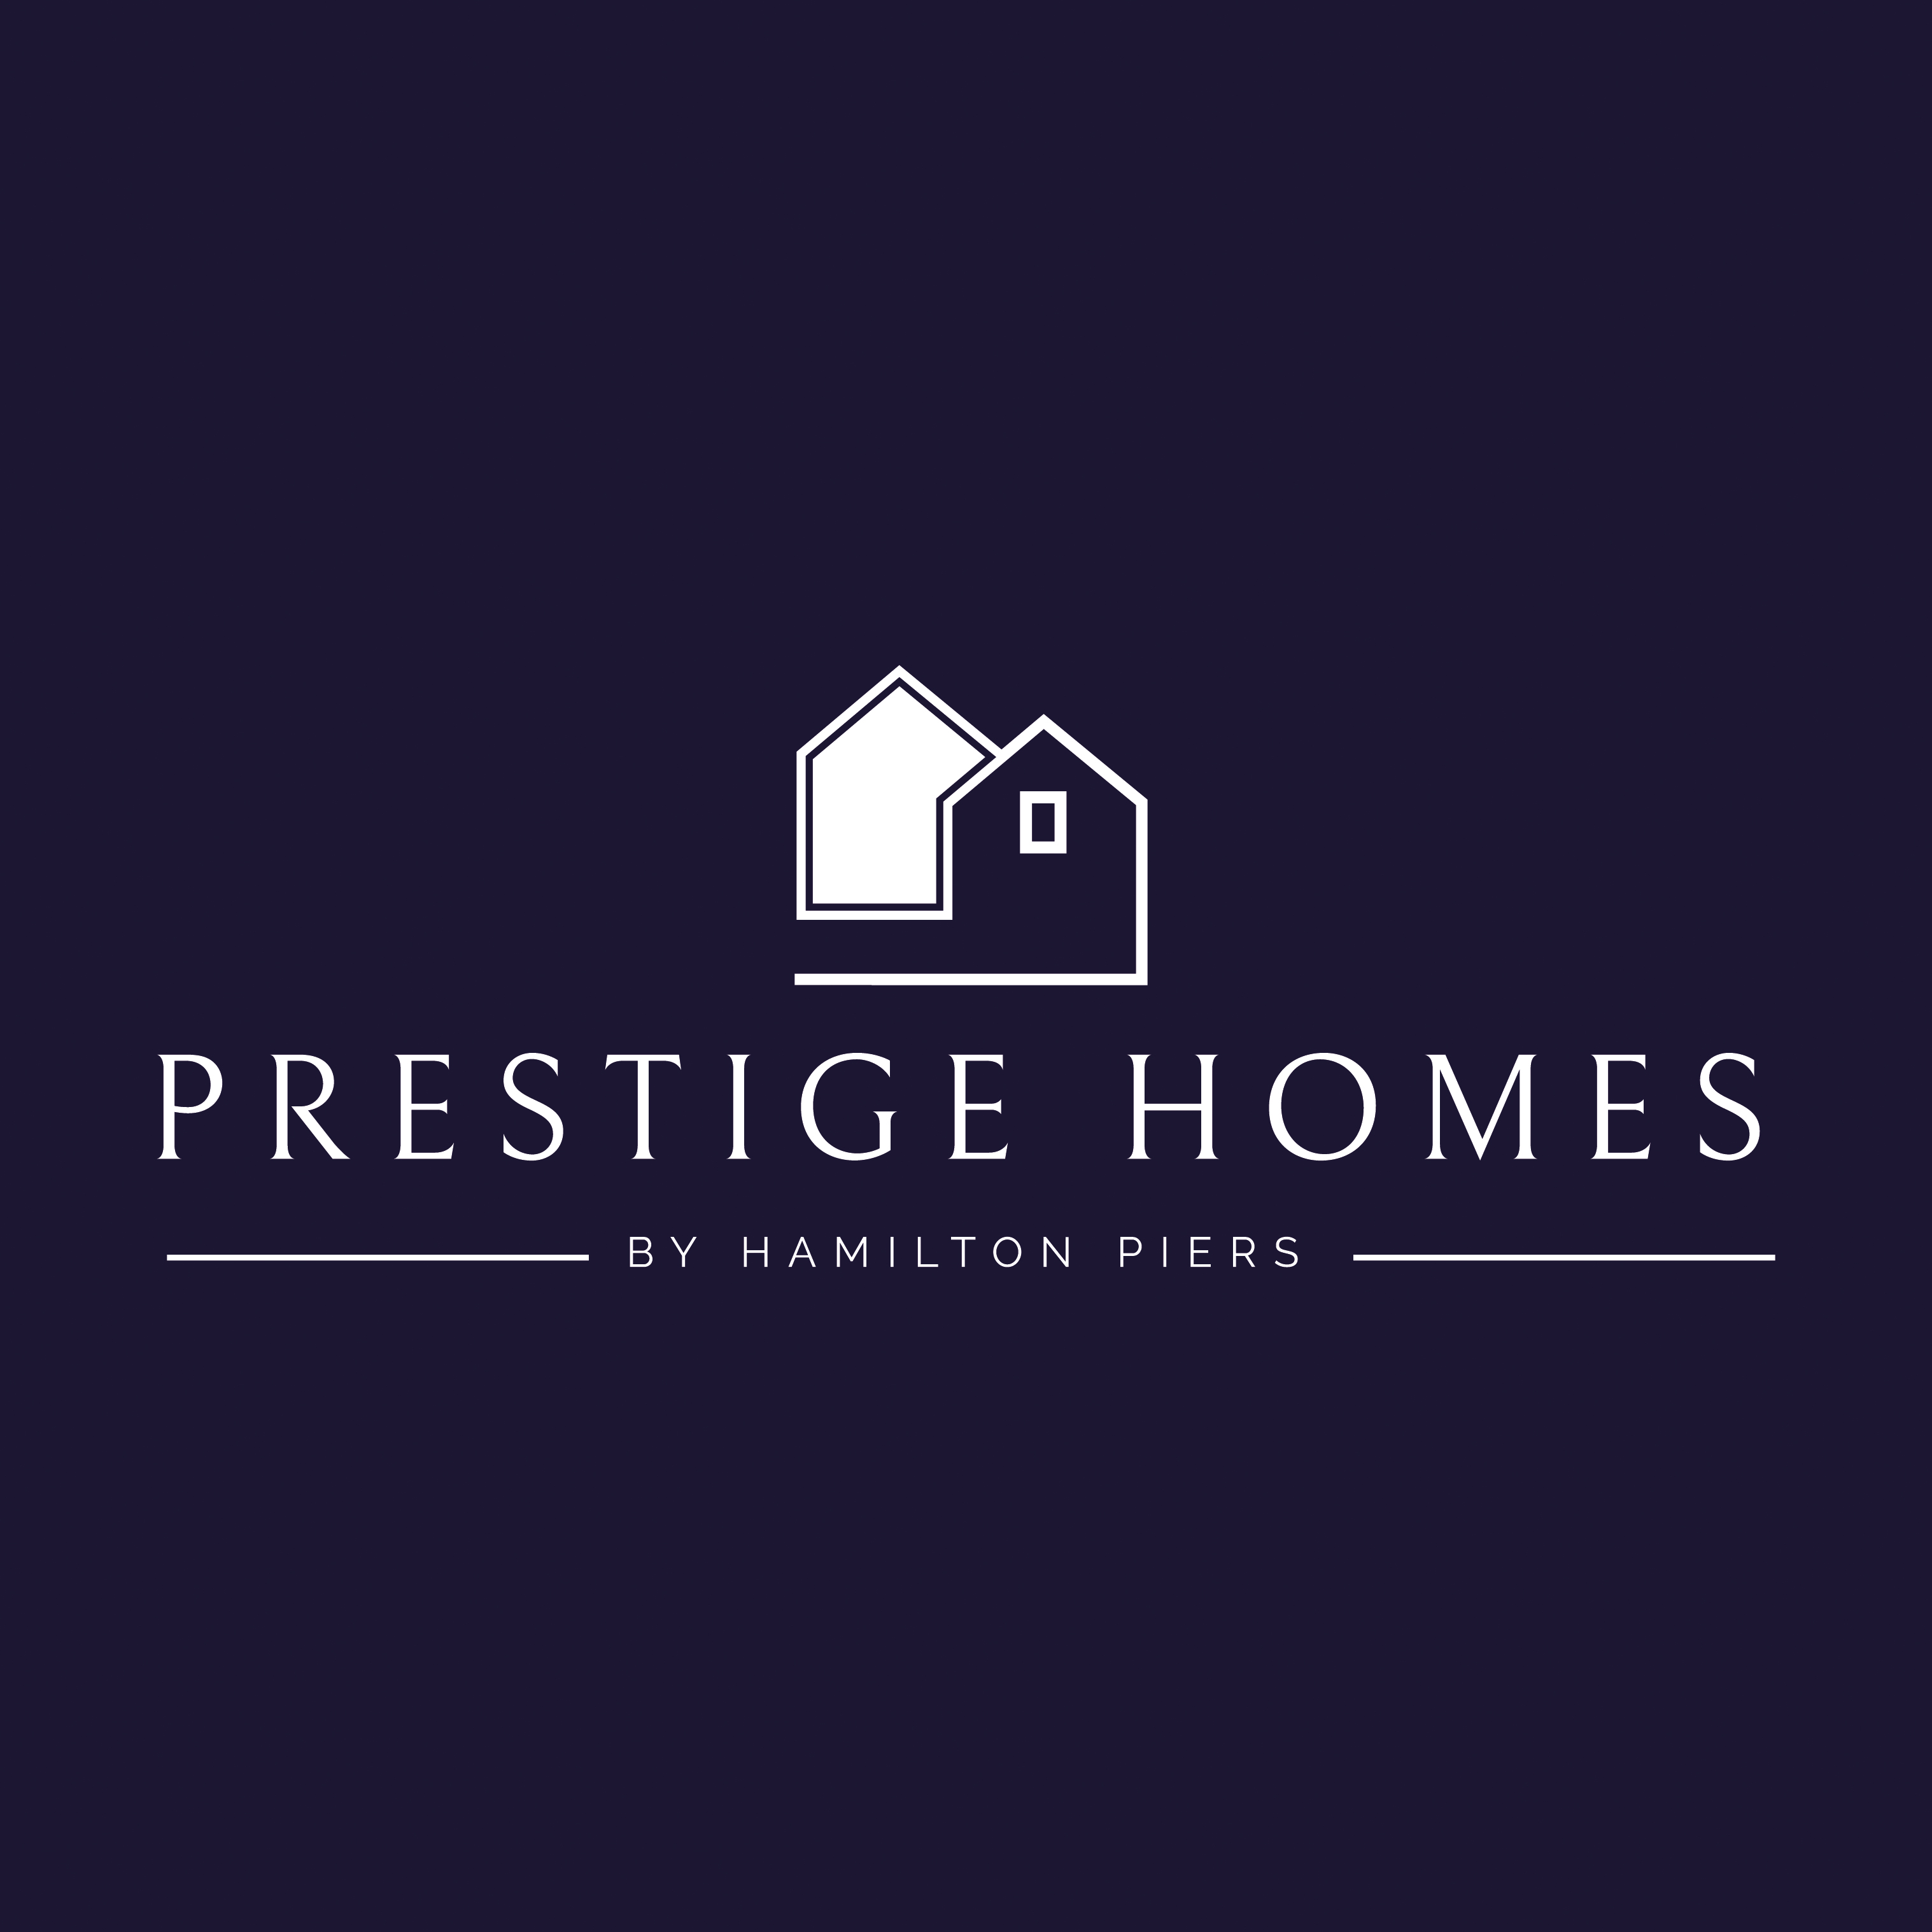 Hamilton Piers - Prestige Homes